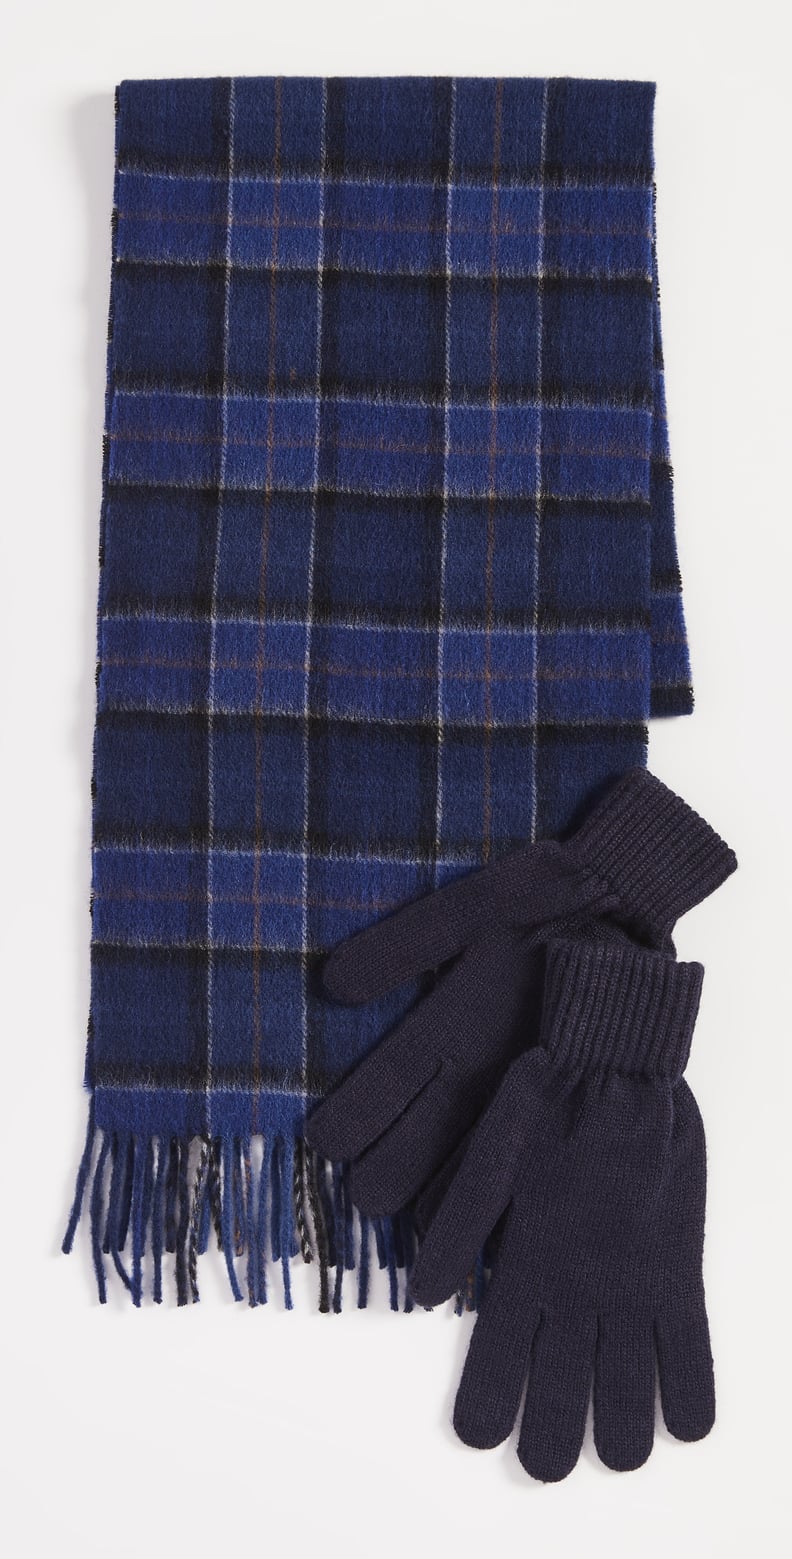 A Cozy Winter Set: Barbour Barbour Tartan Scarf & Glove Gift Set